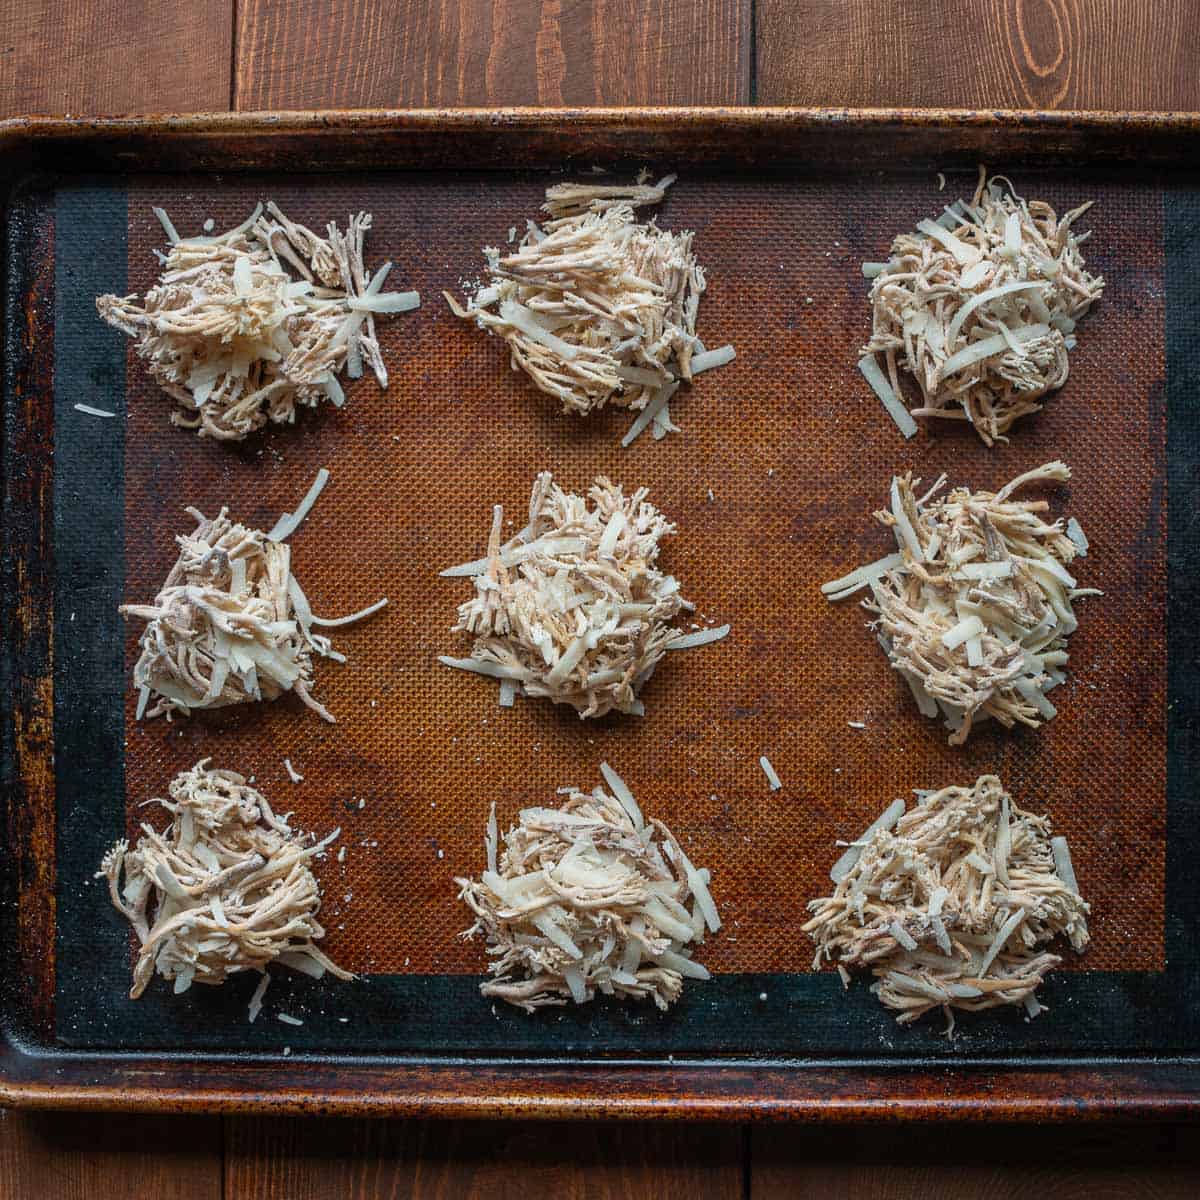 Baking Crown Tipped Coral Mushroom-Parmesan Crackers